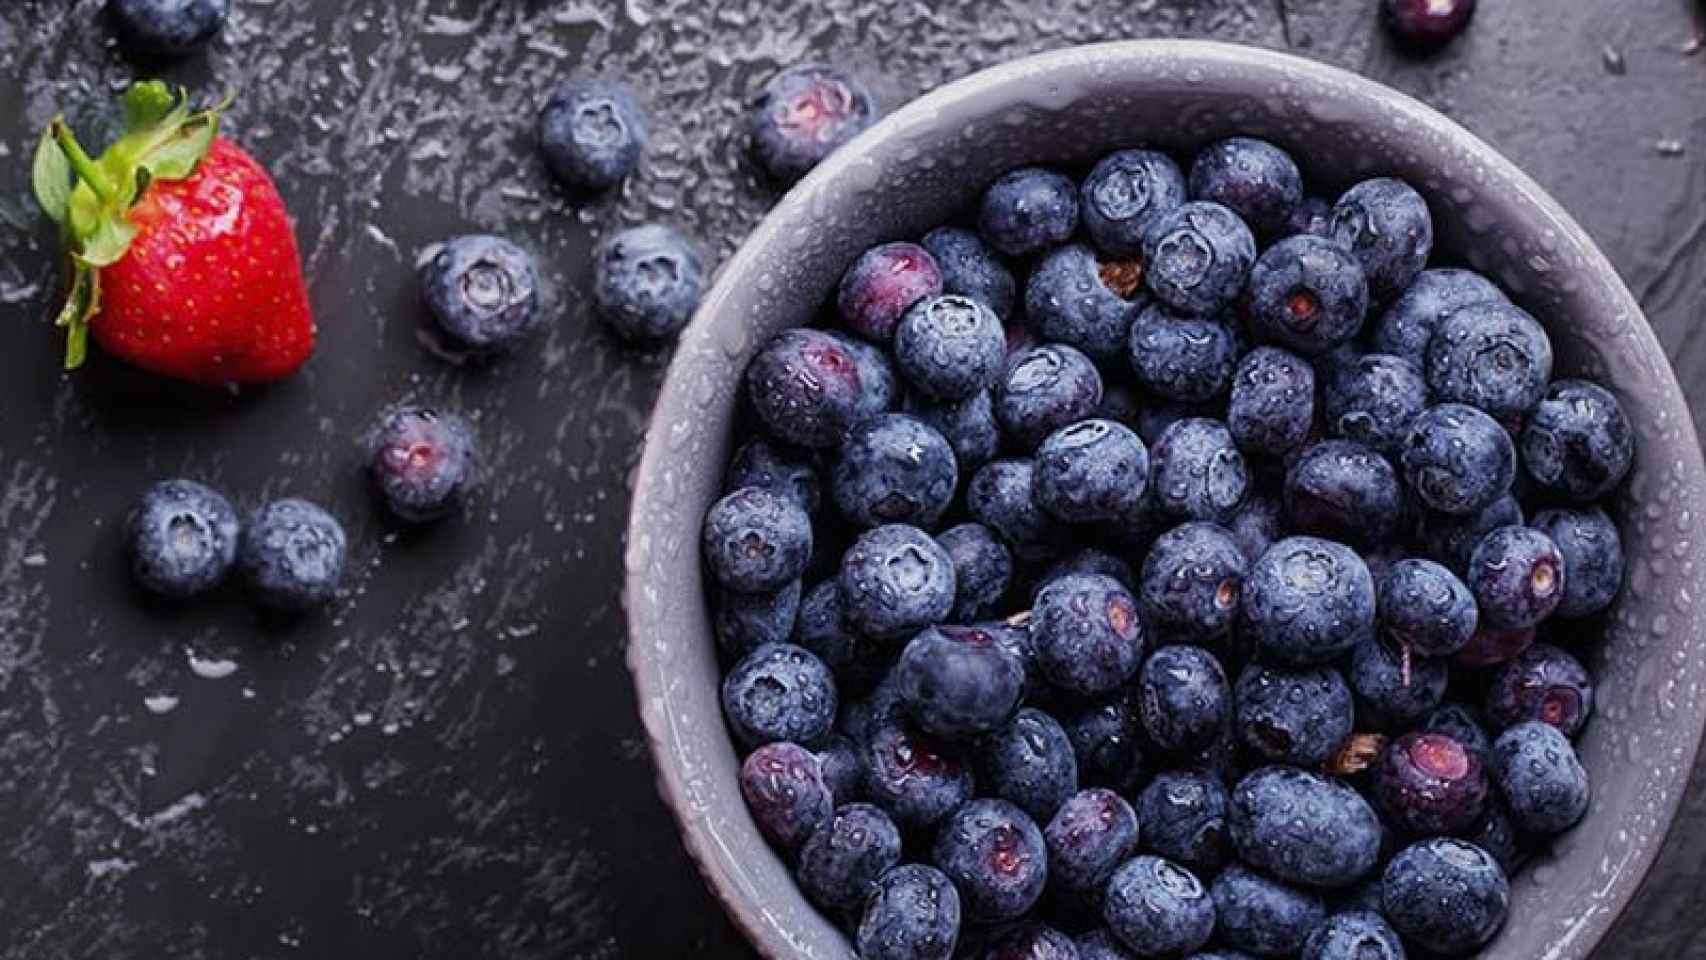 Organic Açaí Berries: An Antioxidant Power Punch and Immune Boost